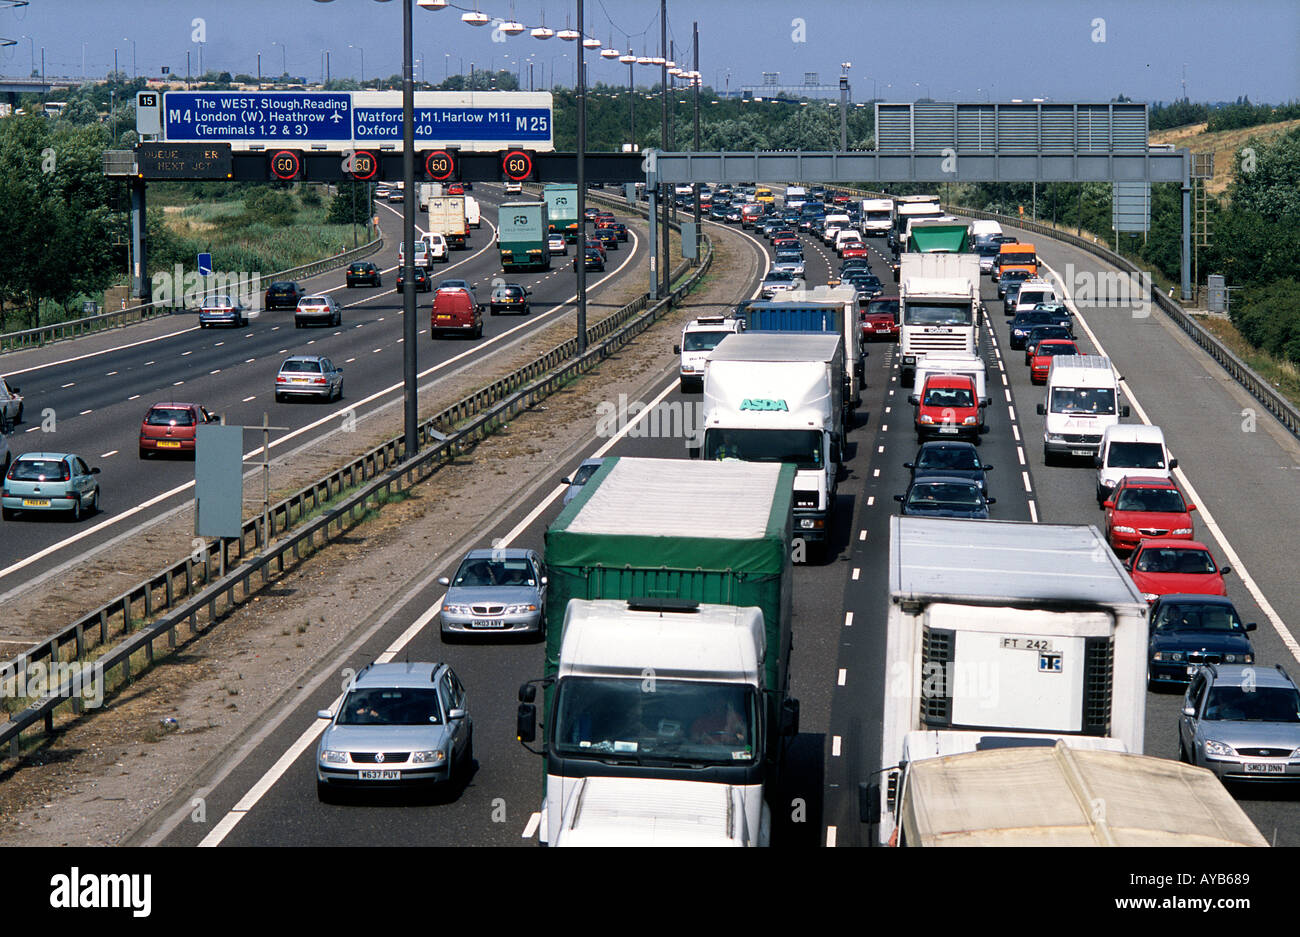 Trafffic jam on M25 Motorway London Stock Photo